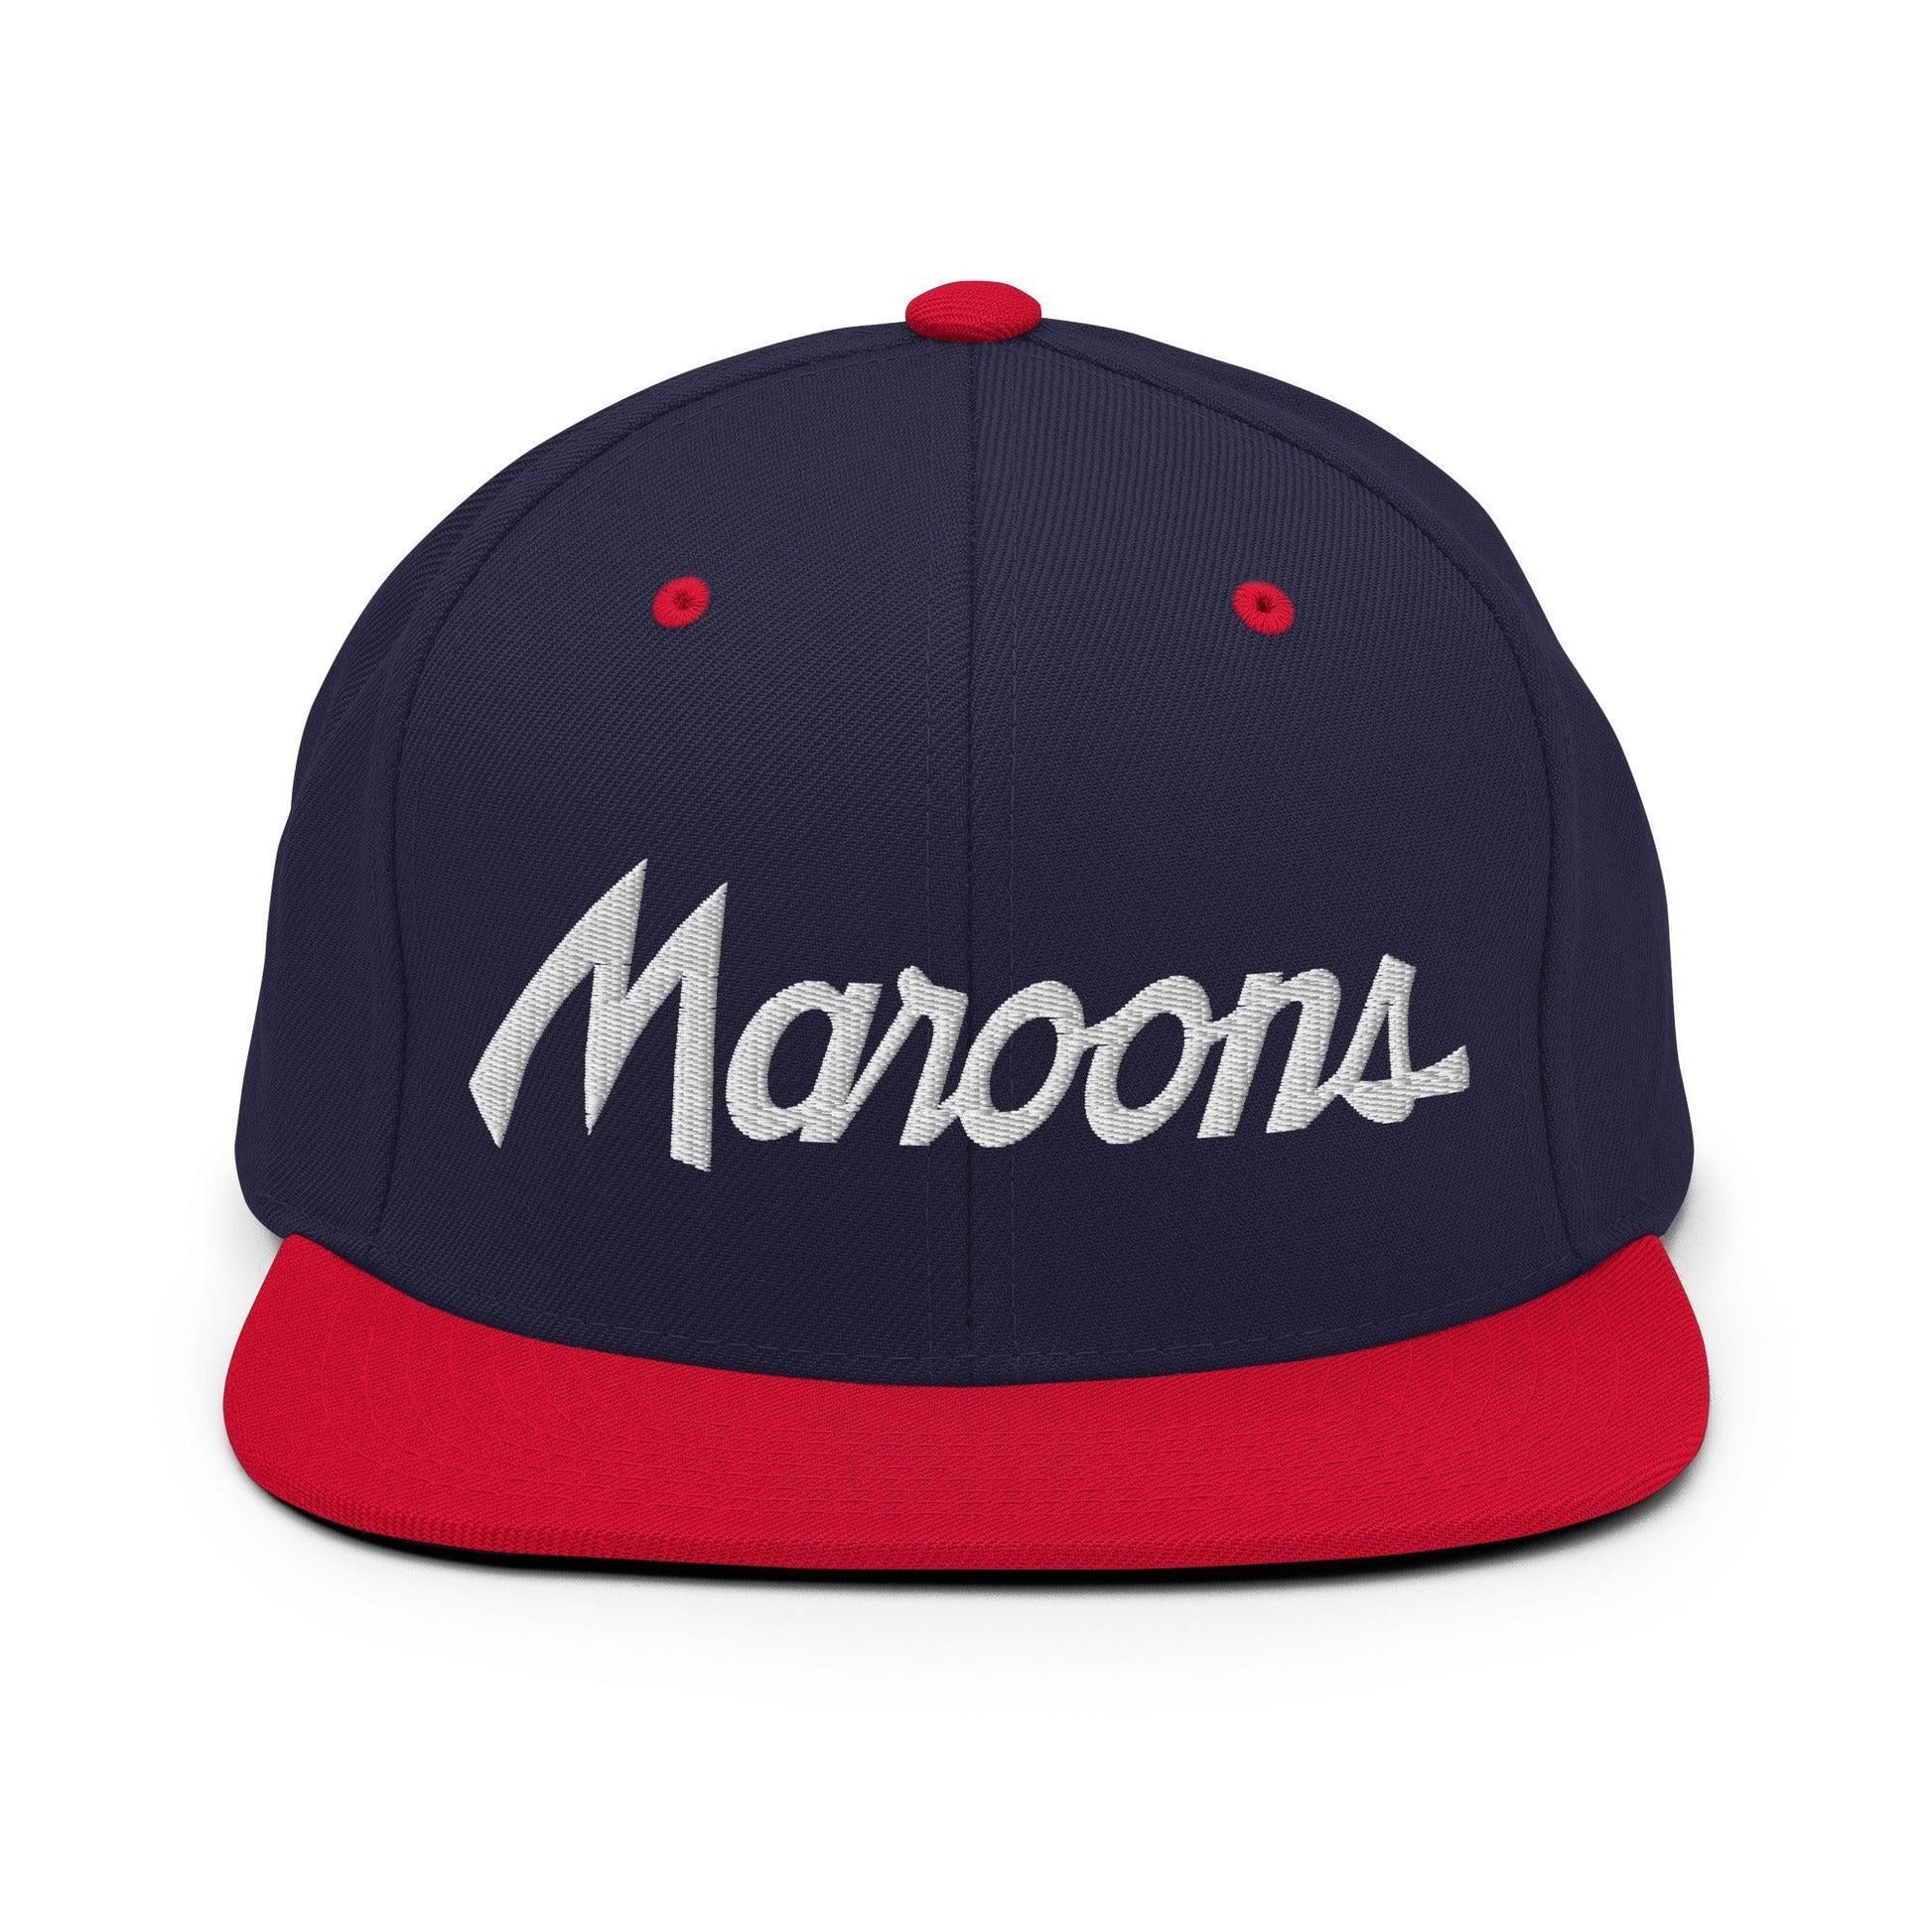 Maroons School Mascot Script Snapback Hat Navy/ Red